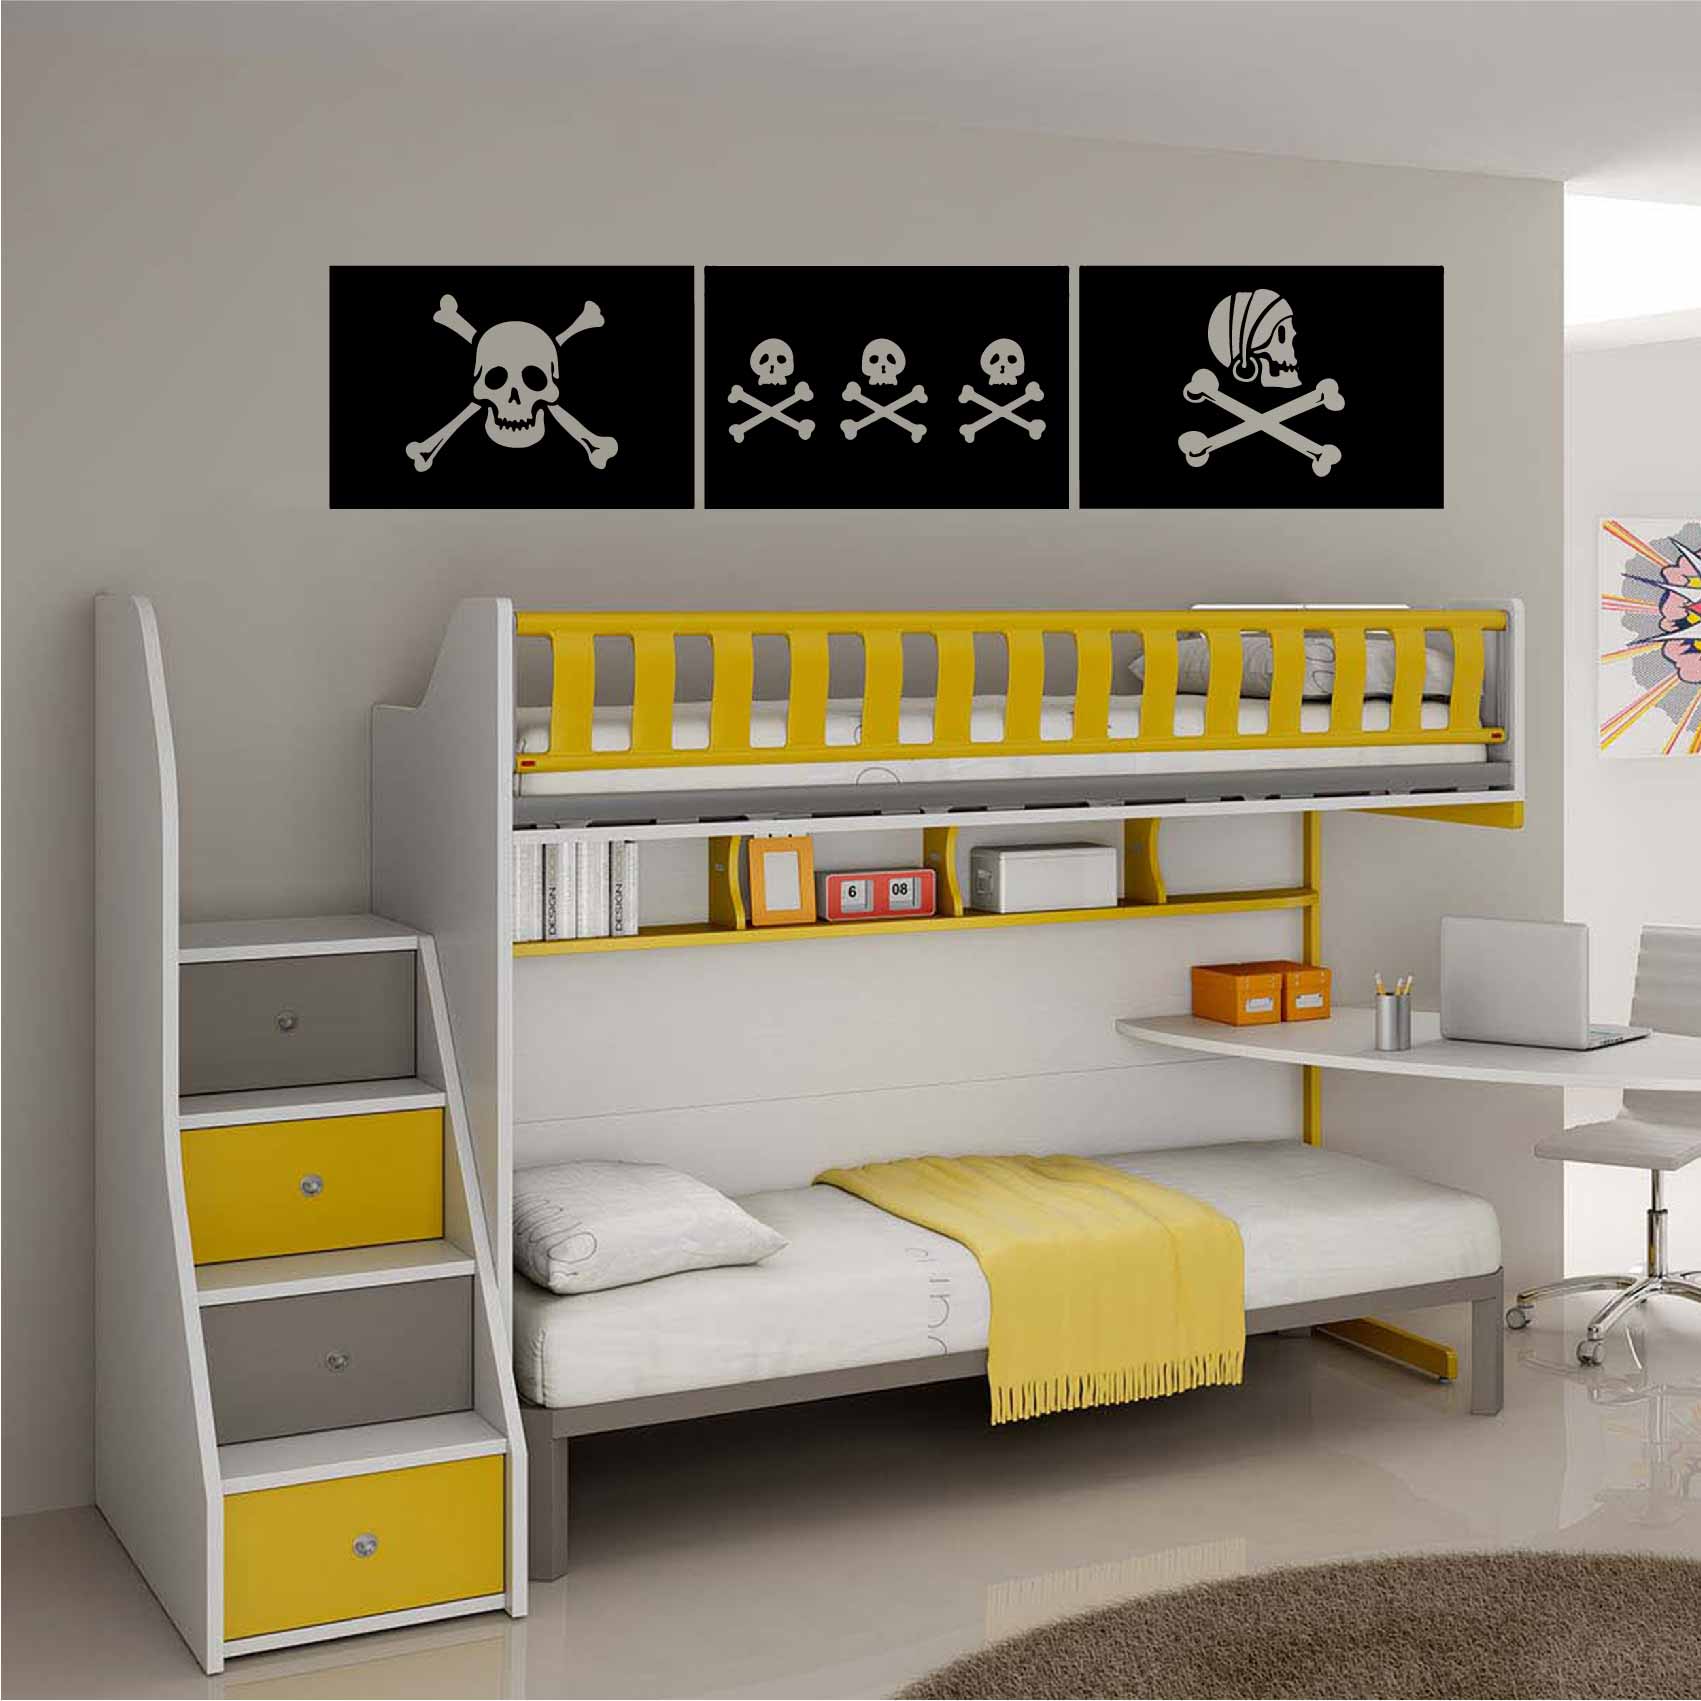 stickers-drapeaux-pirate-ref14pirate-autocollant-muraux-pirates-chambre-enfant-sticker-mural-ado-deco-salon-salle-de-bain-garçon